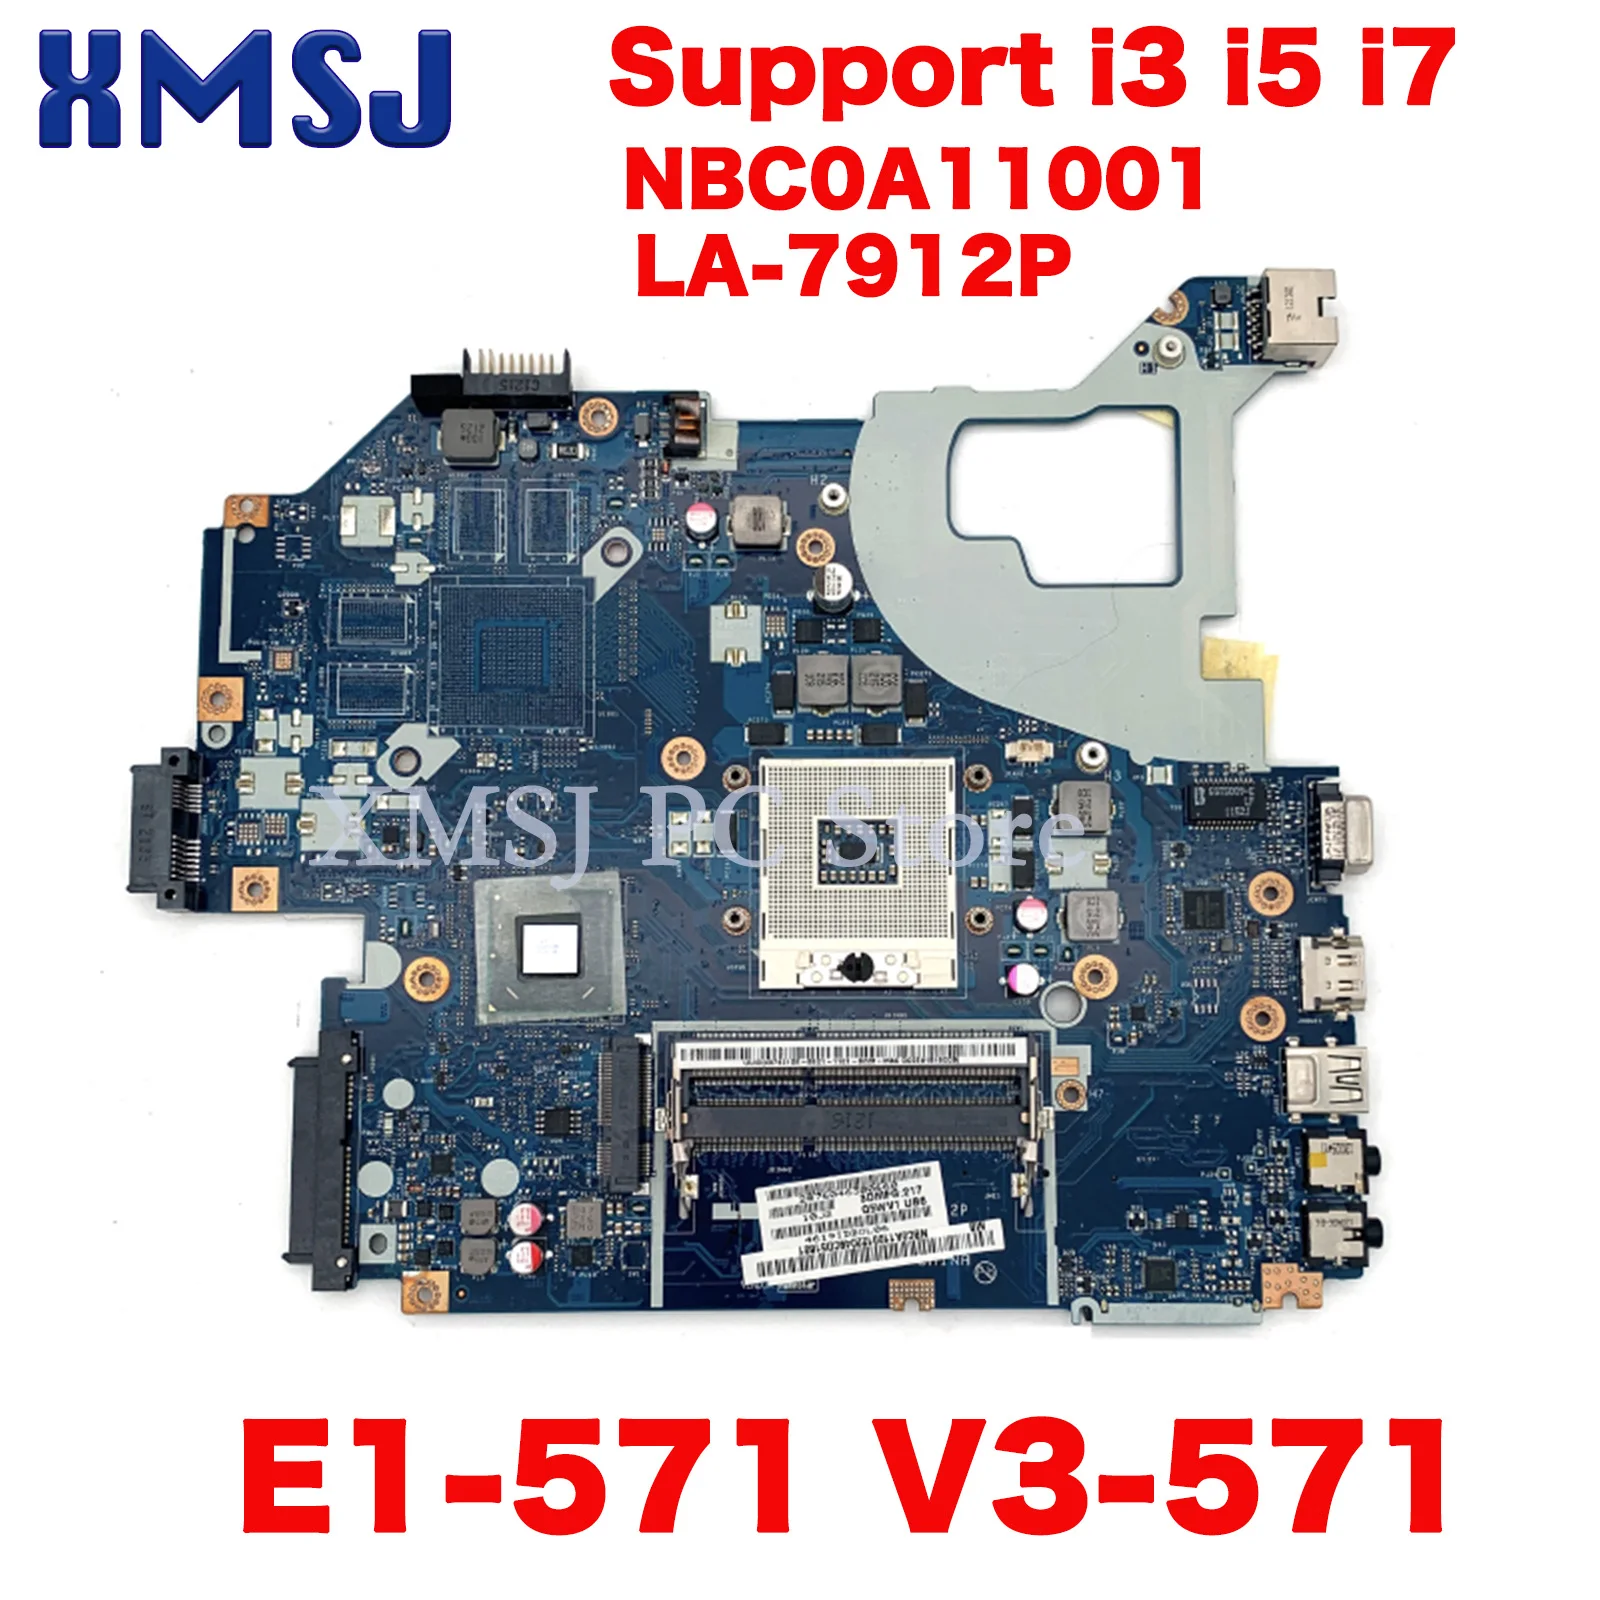 XMSJ NBC0A11001 Q5WV1 LA-7912P Laptop Motherboard for Acer NV56R E1-571 V3-571 HM77 GMA HD 4000 DDR3 Support i3 i5 i7